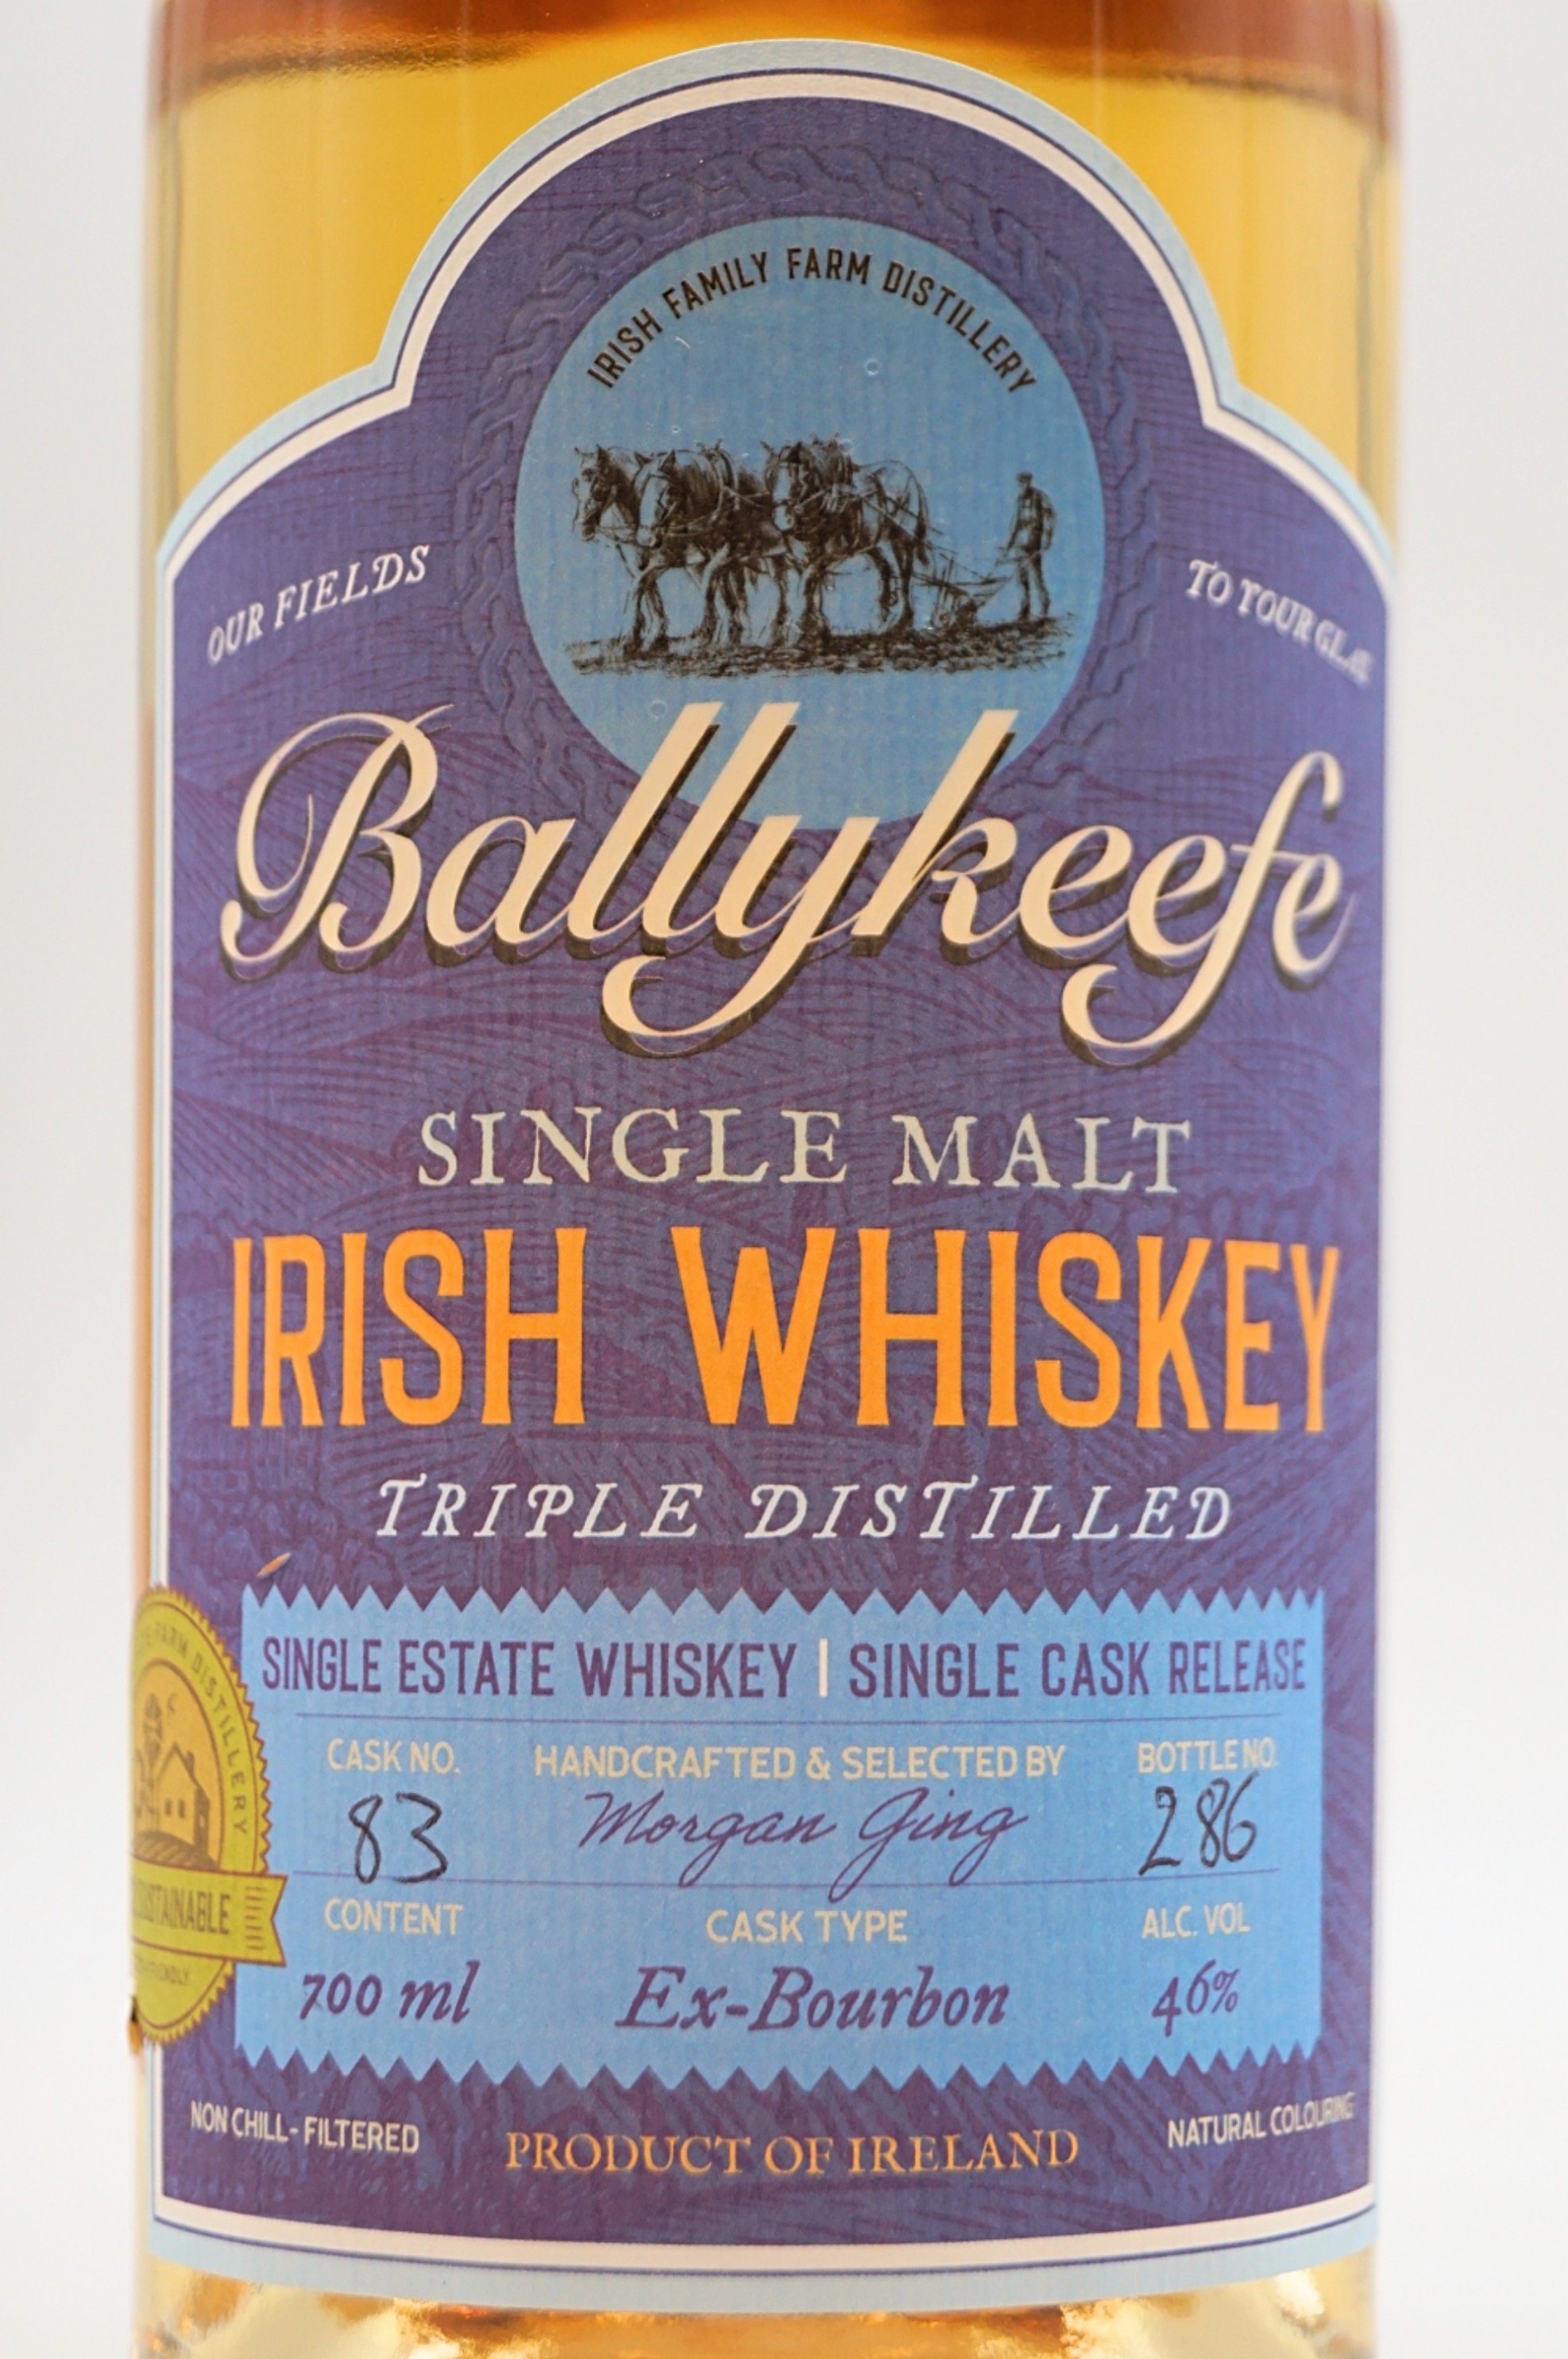 Single Malt Irish Whiskey